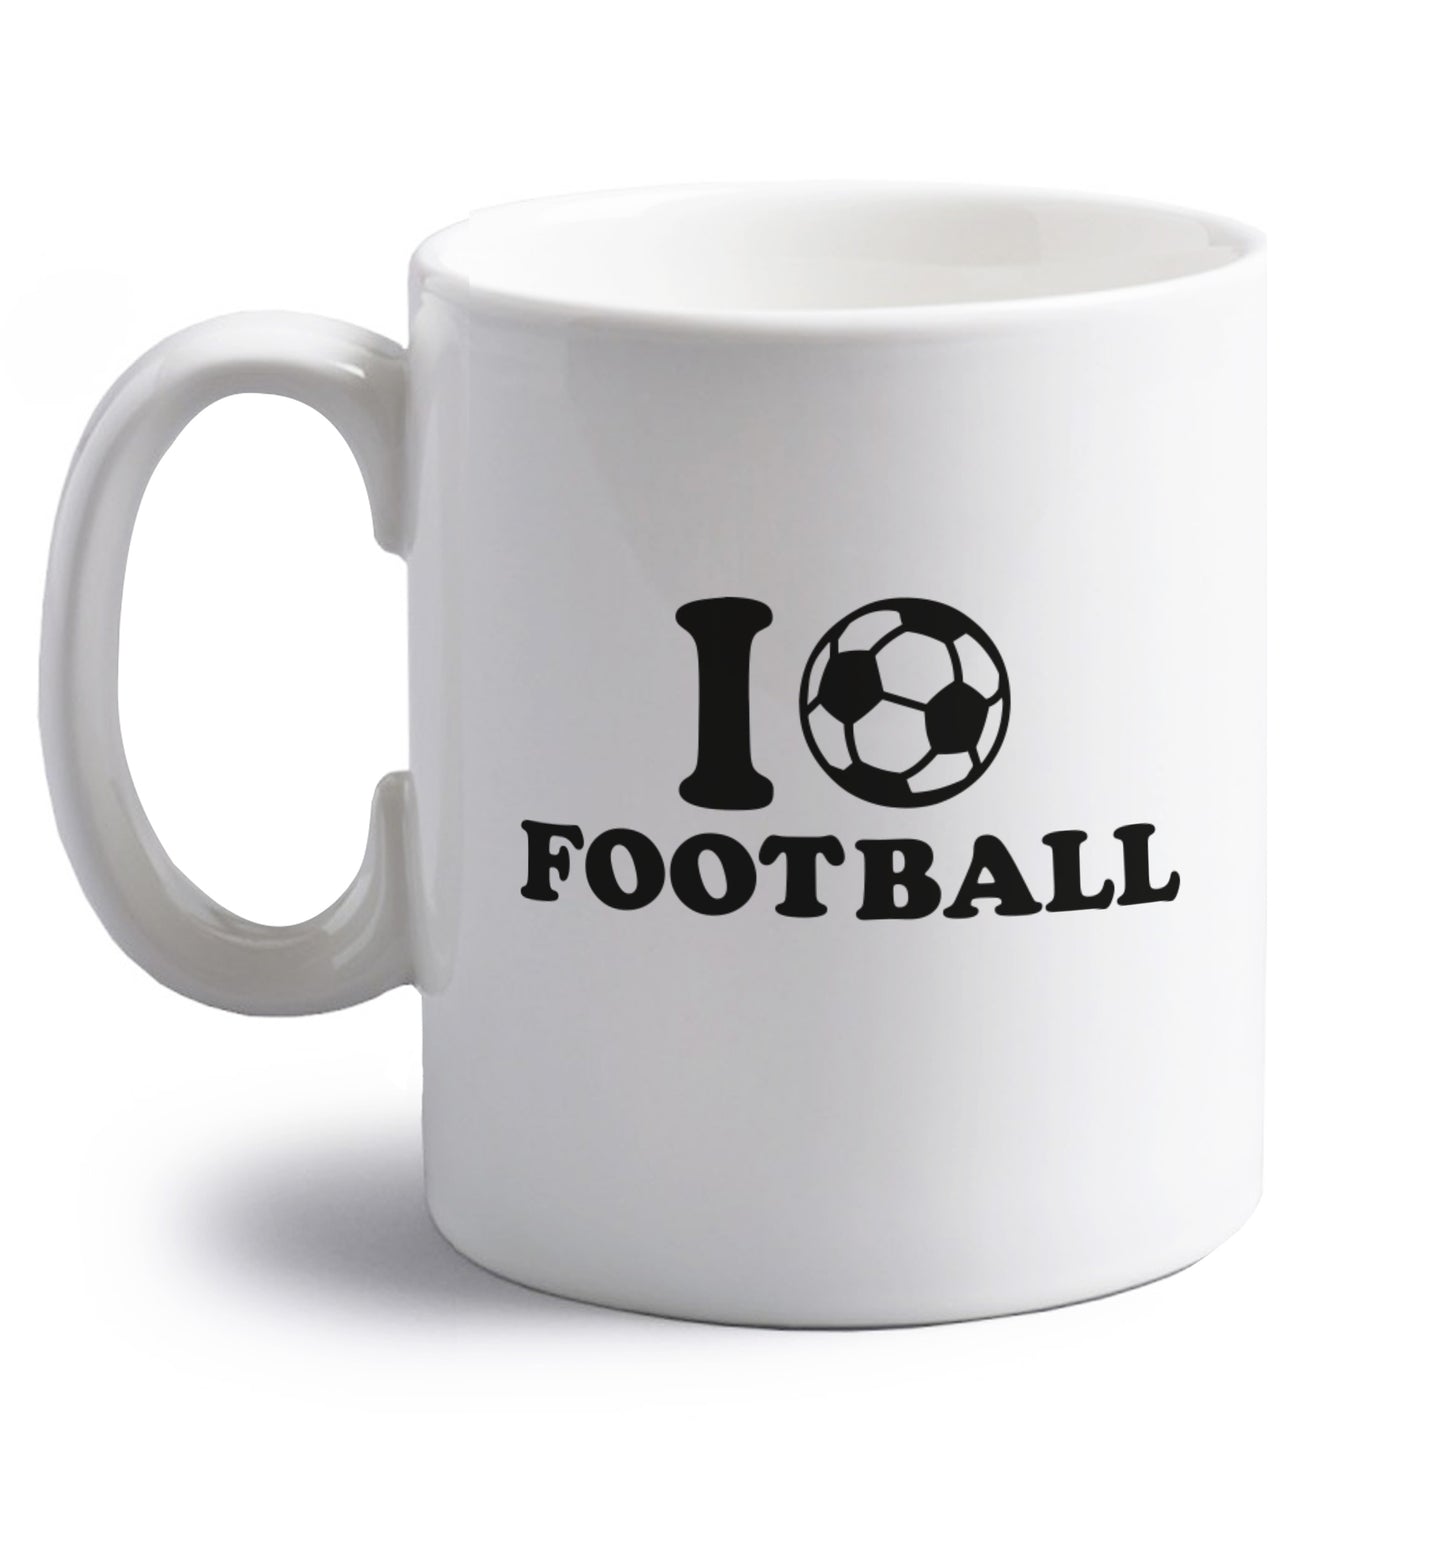 I love football right handed white ceramic mug 